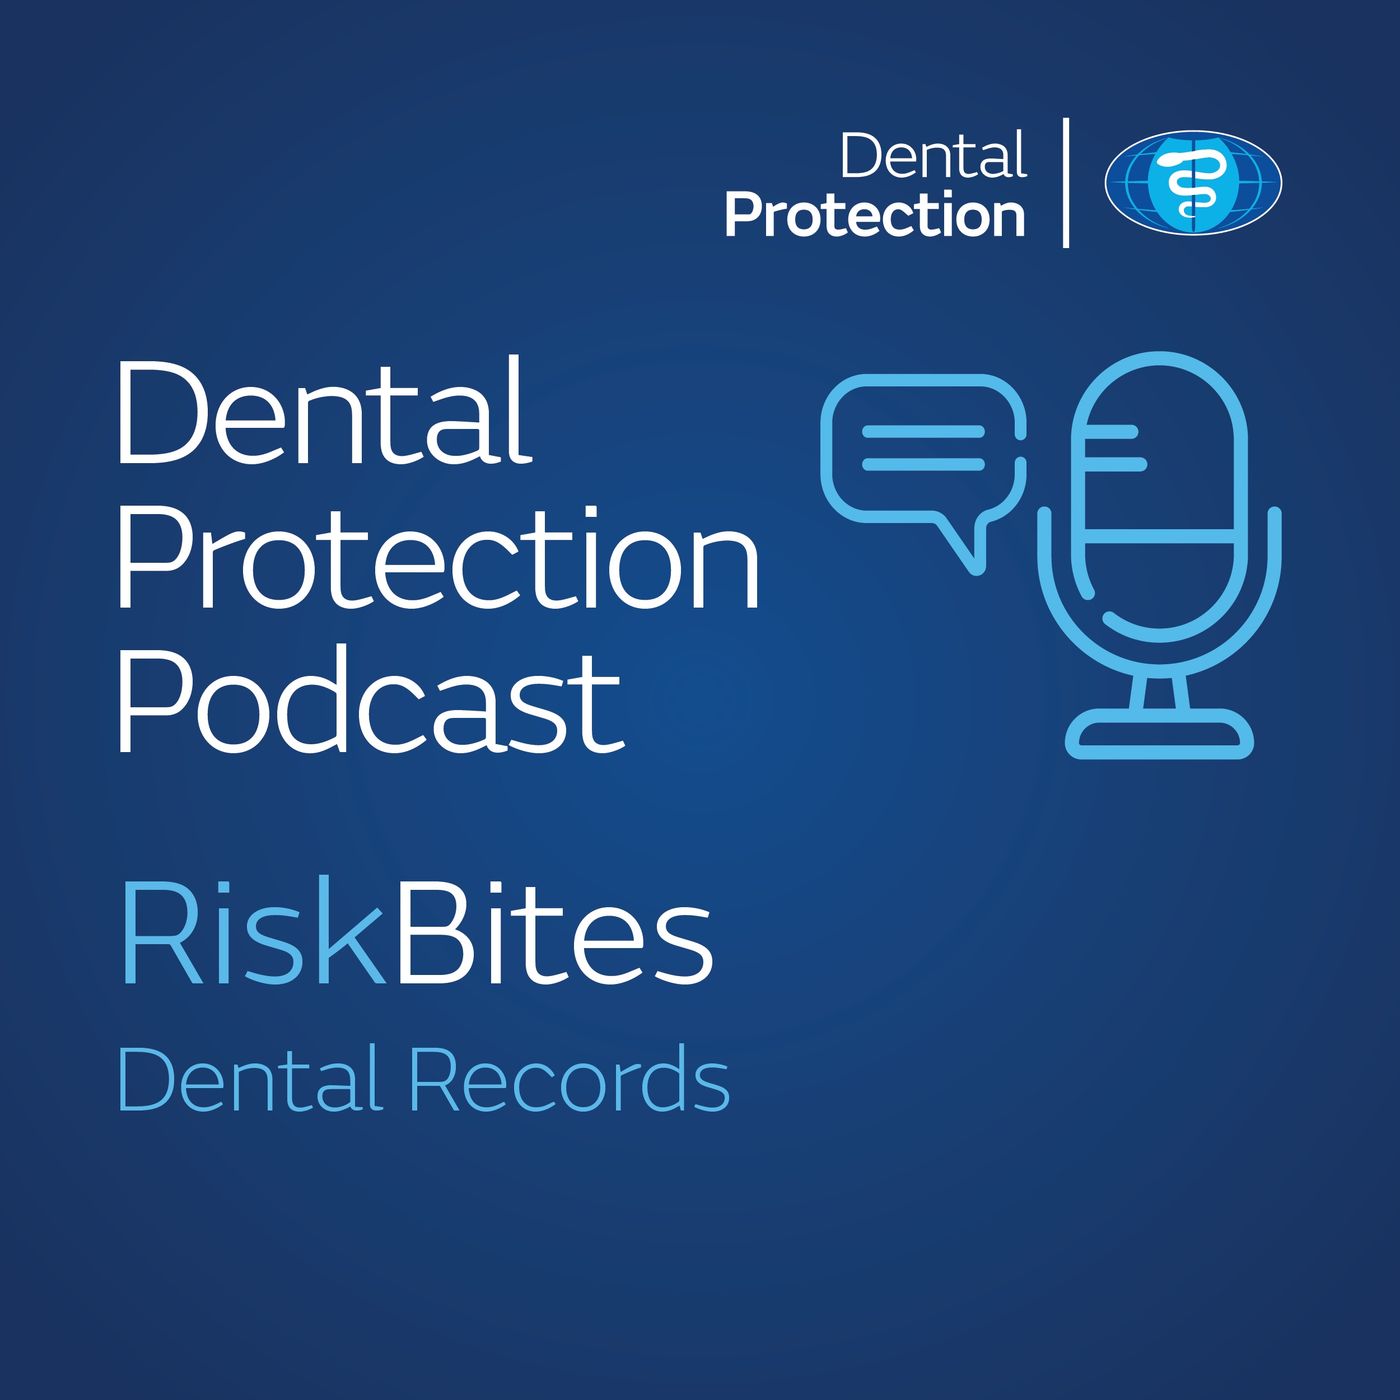 RiskBites: Dental records